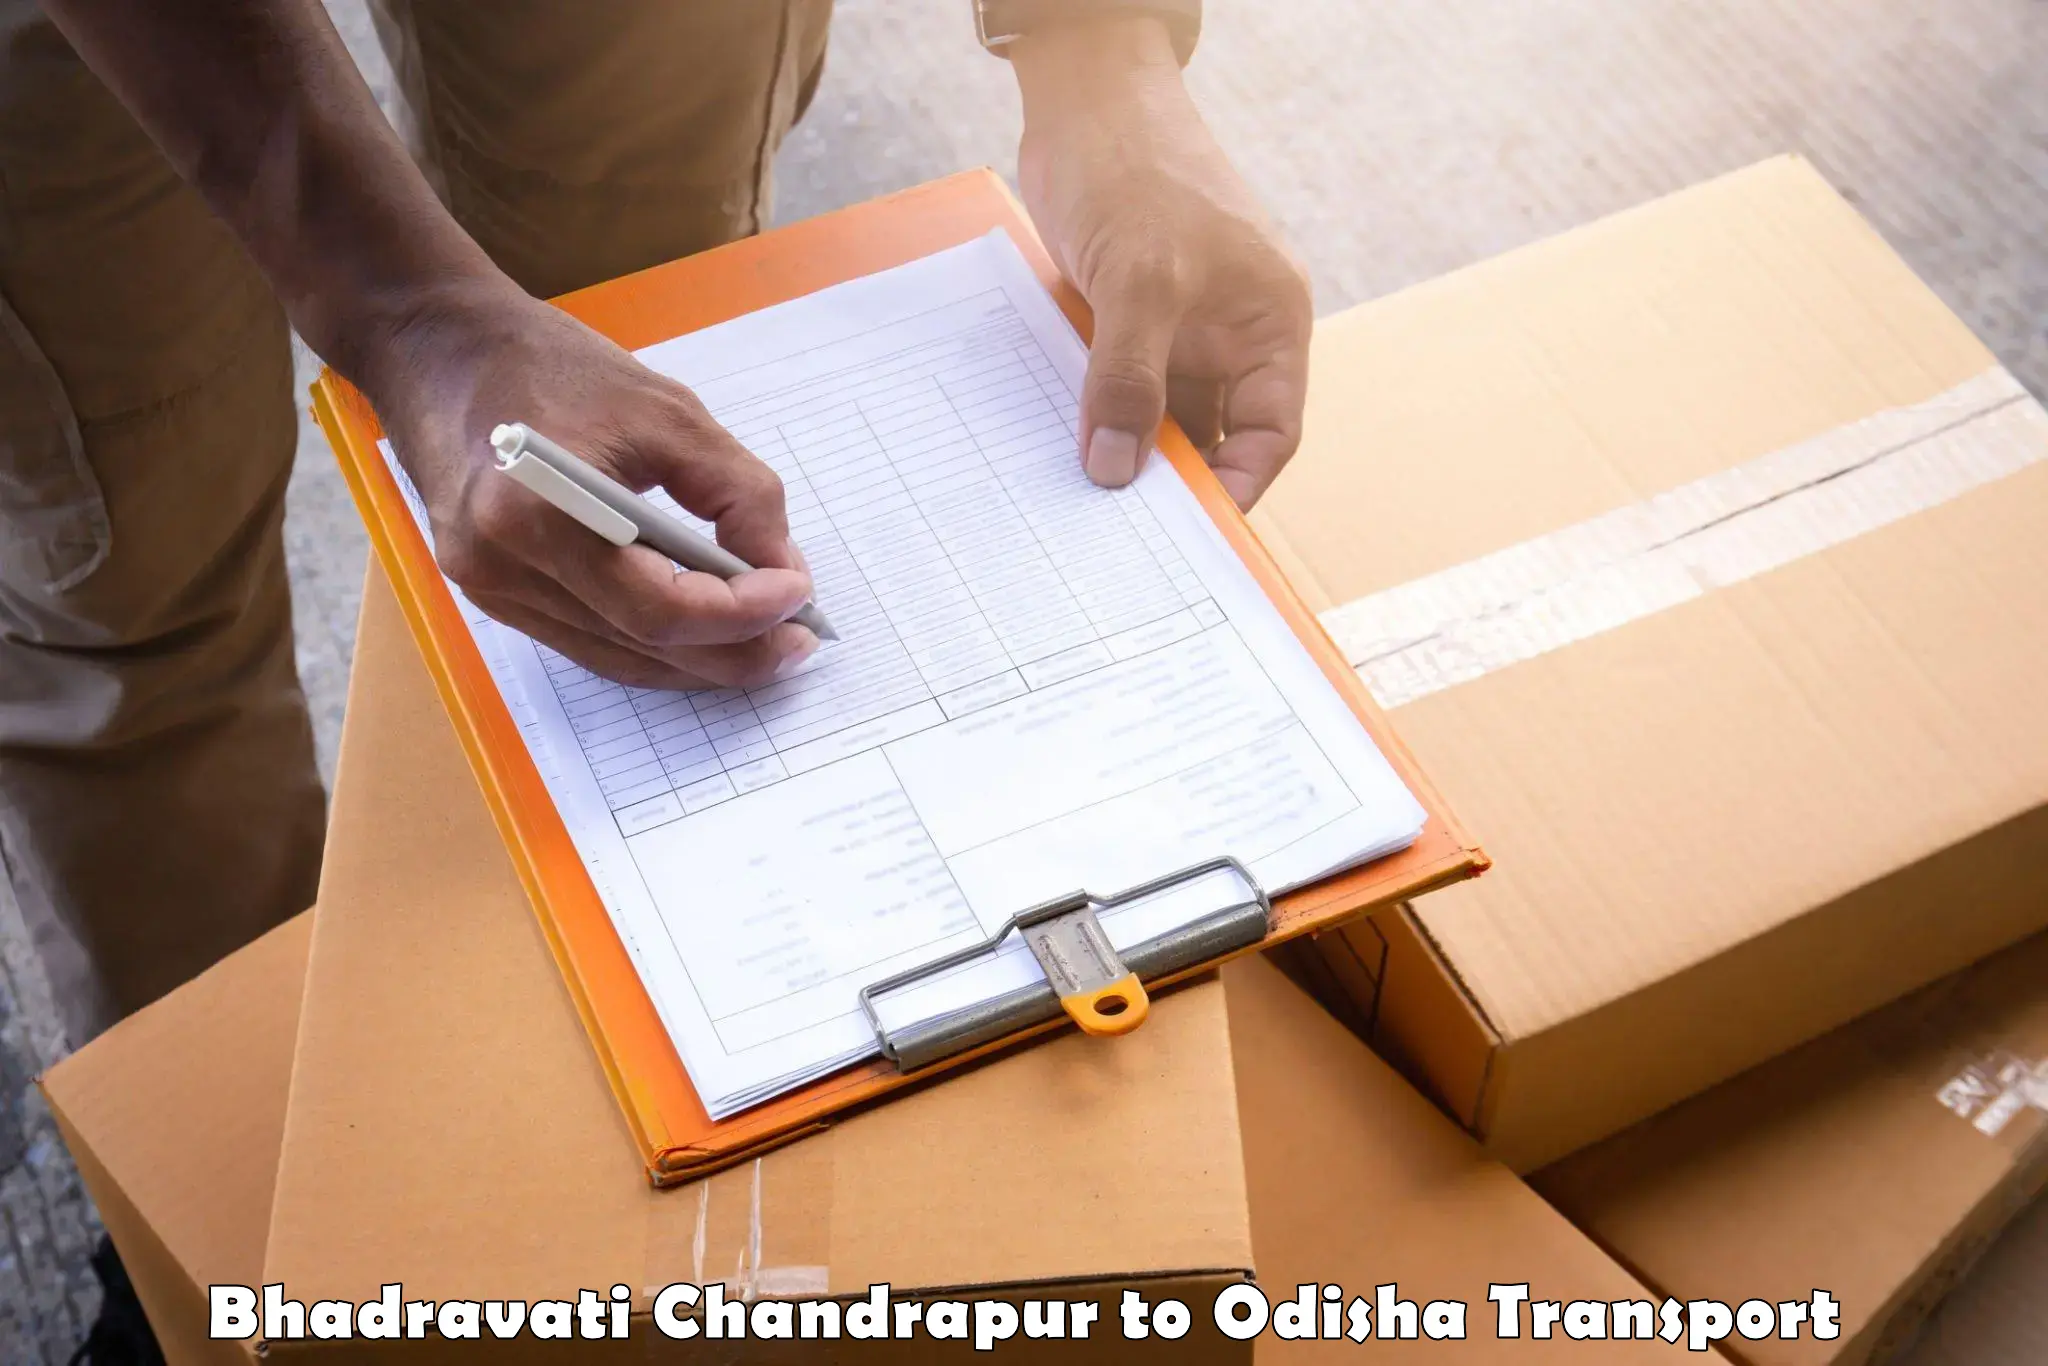 Furniture transport service Bhadravati Chandrapur to Jharsuguda